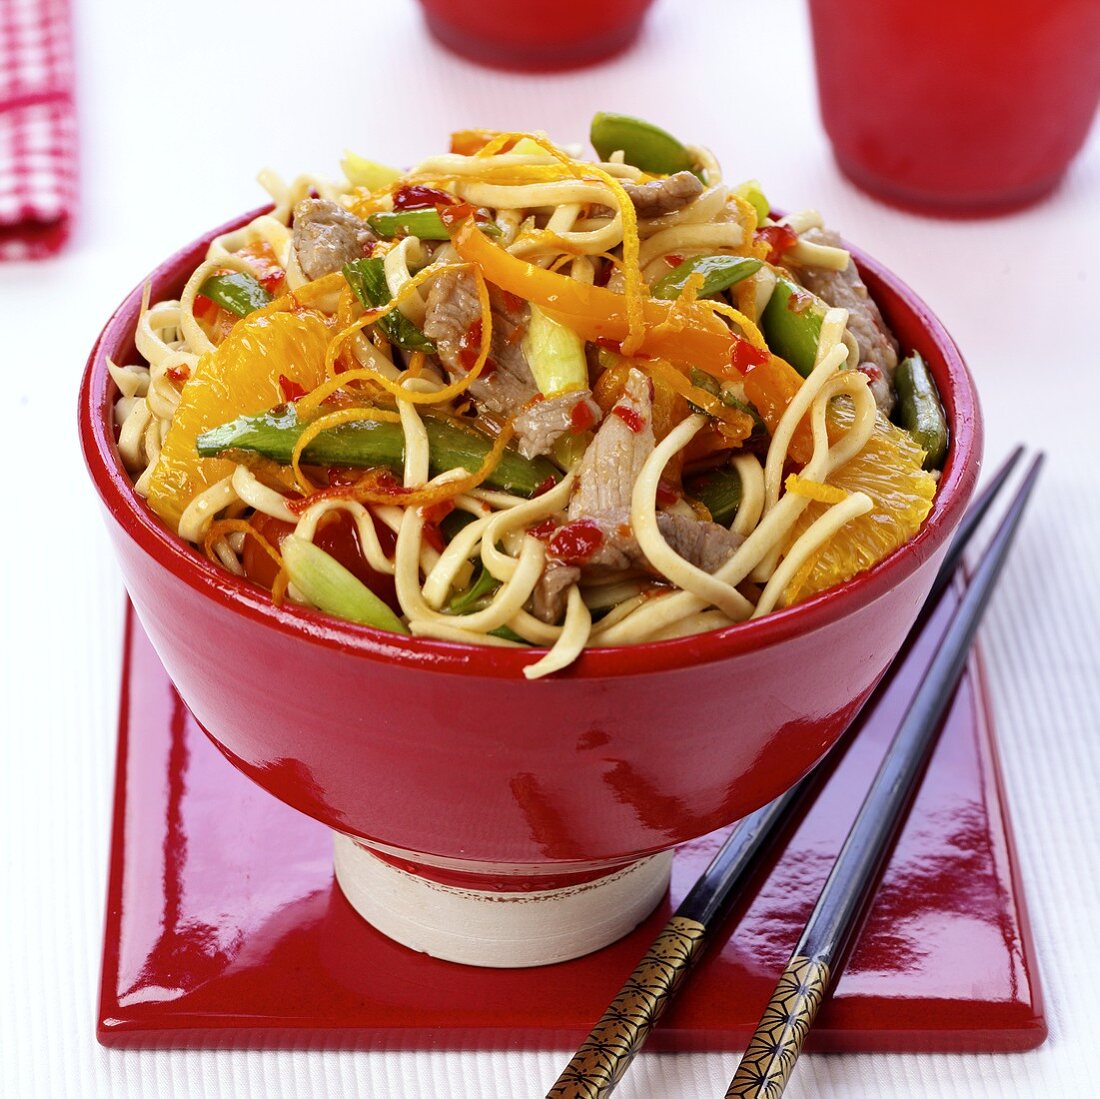 Asian noodles with pork, vegetables and oranges